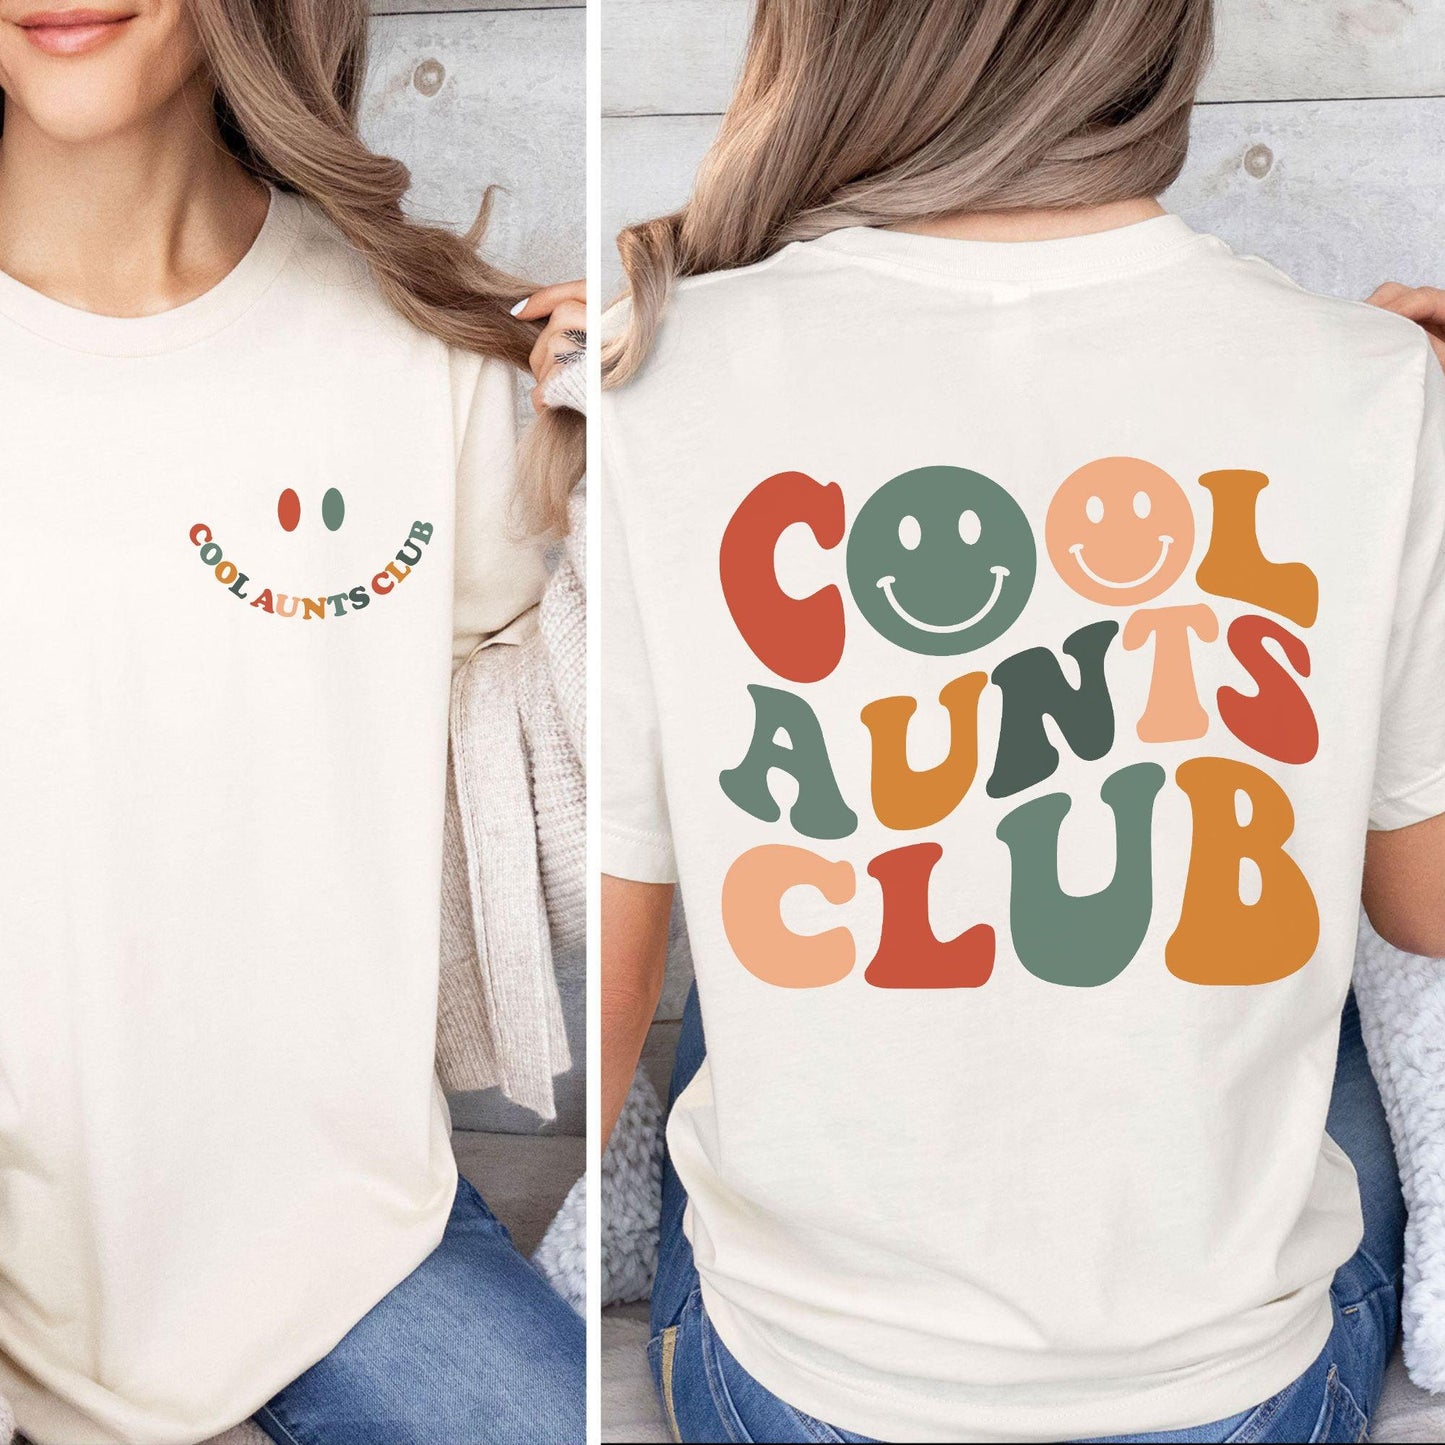 Cooles Aunts Club Sweatshirt - Cooles Tante Shirts und Hoodie - GiftHaus